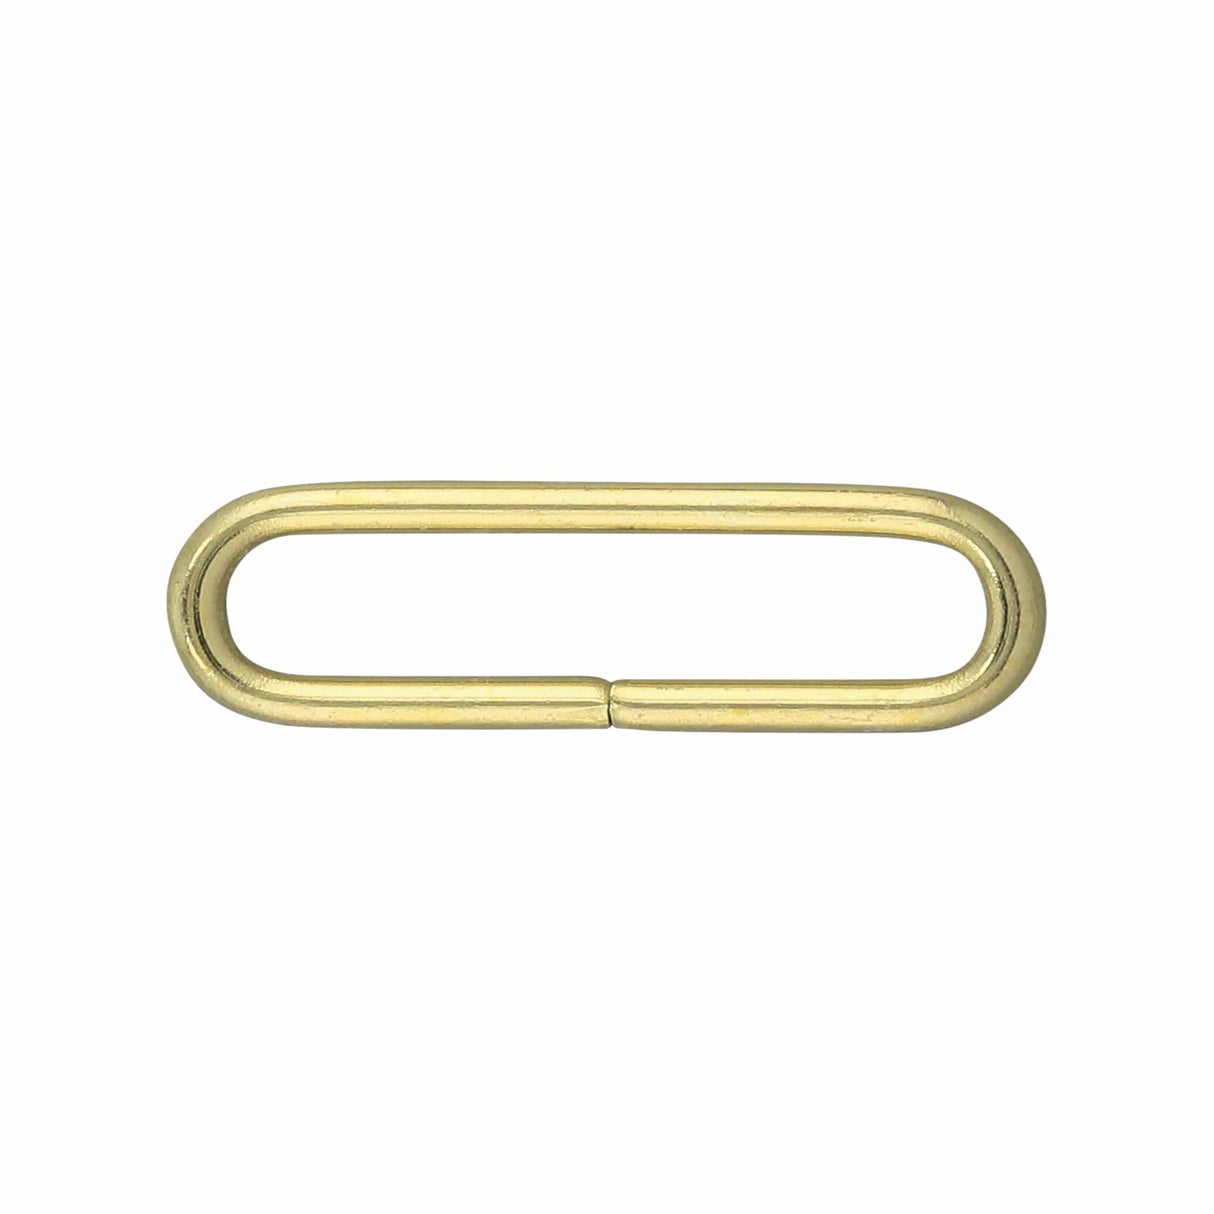 Ohio Travel Bag 1" Brass, Split Oval Ring, Solid Brass, #P-3246-1 P-3246-1